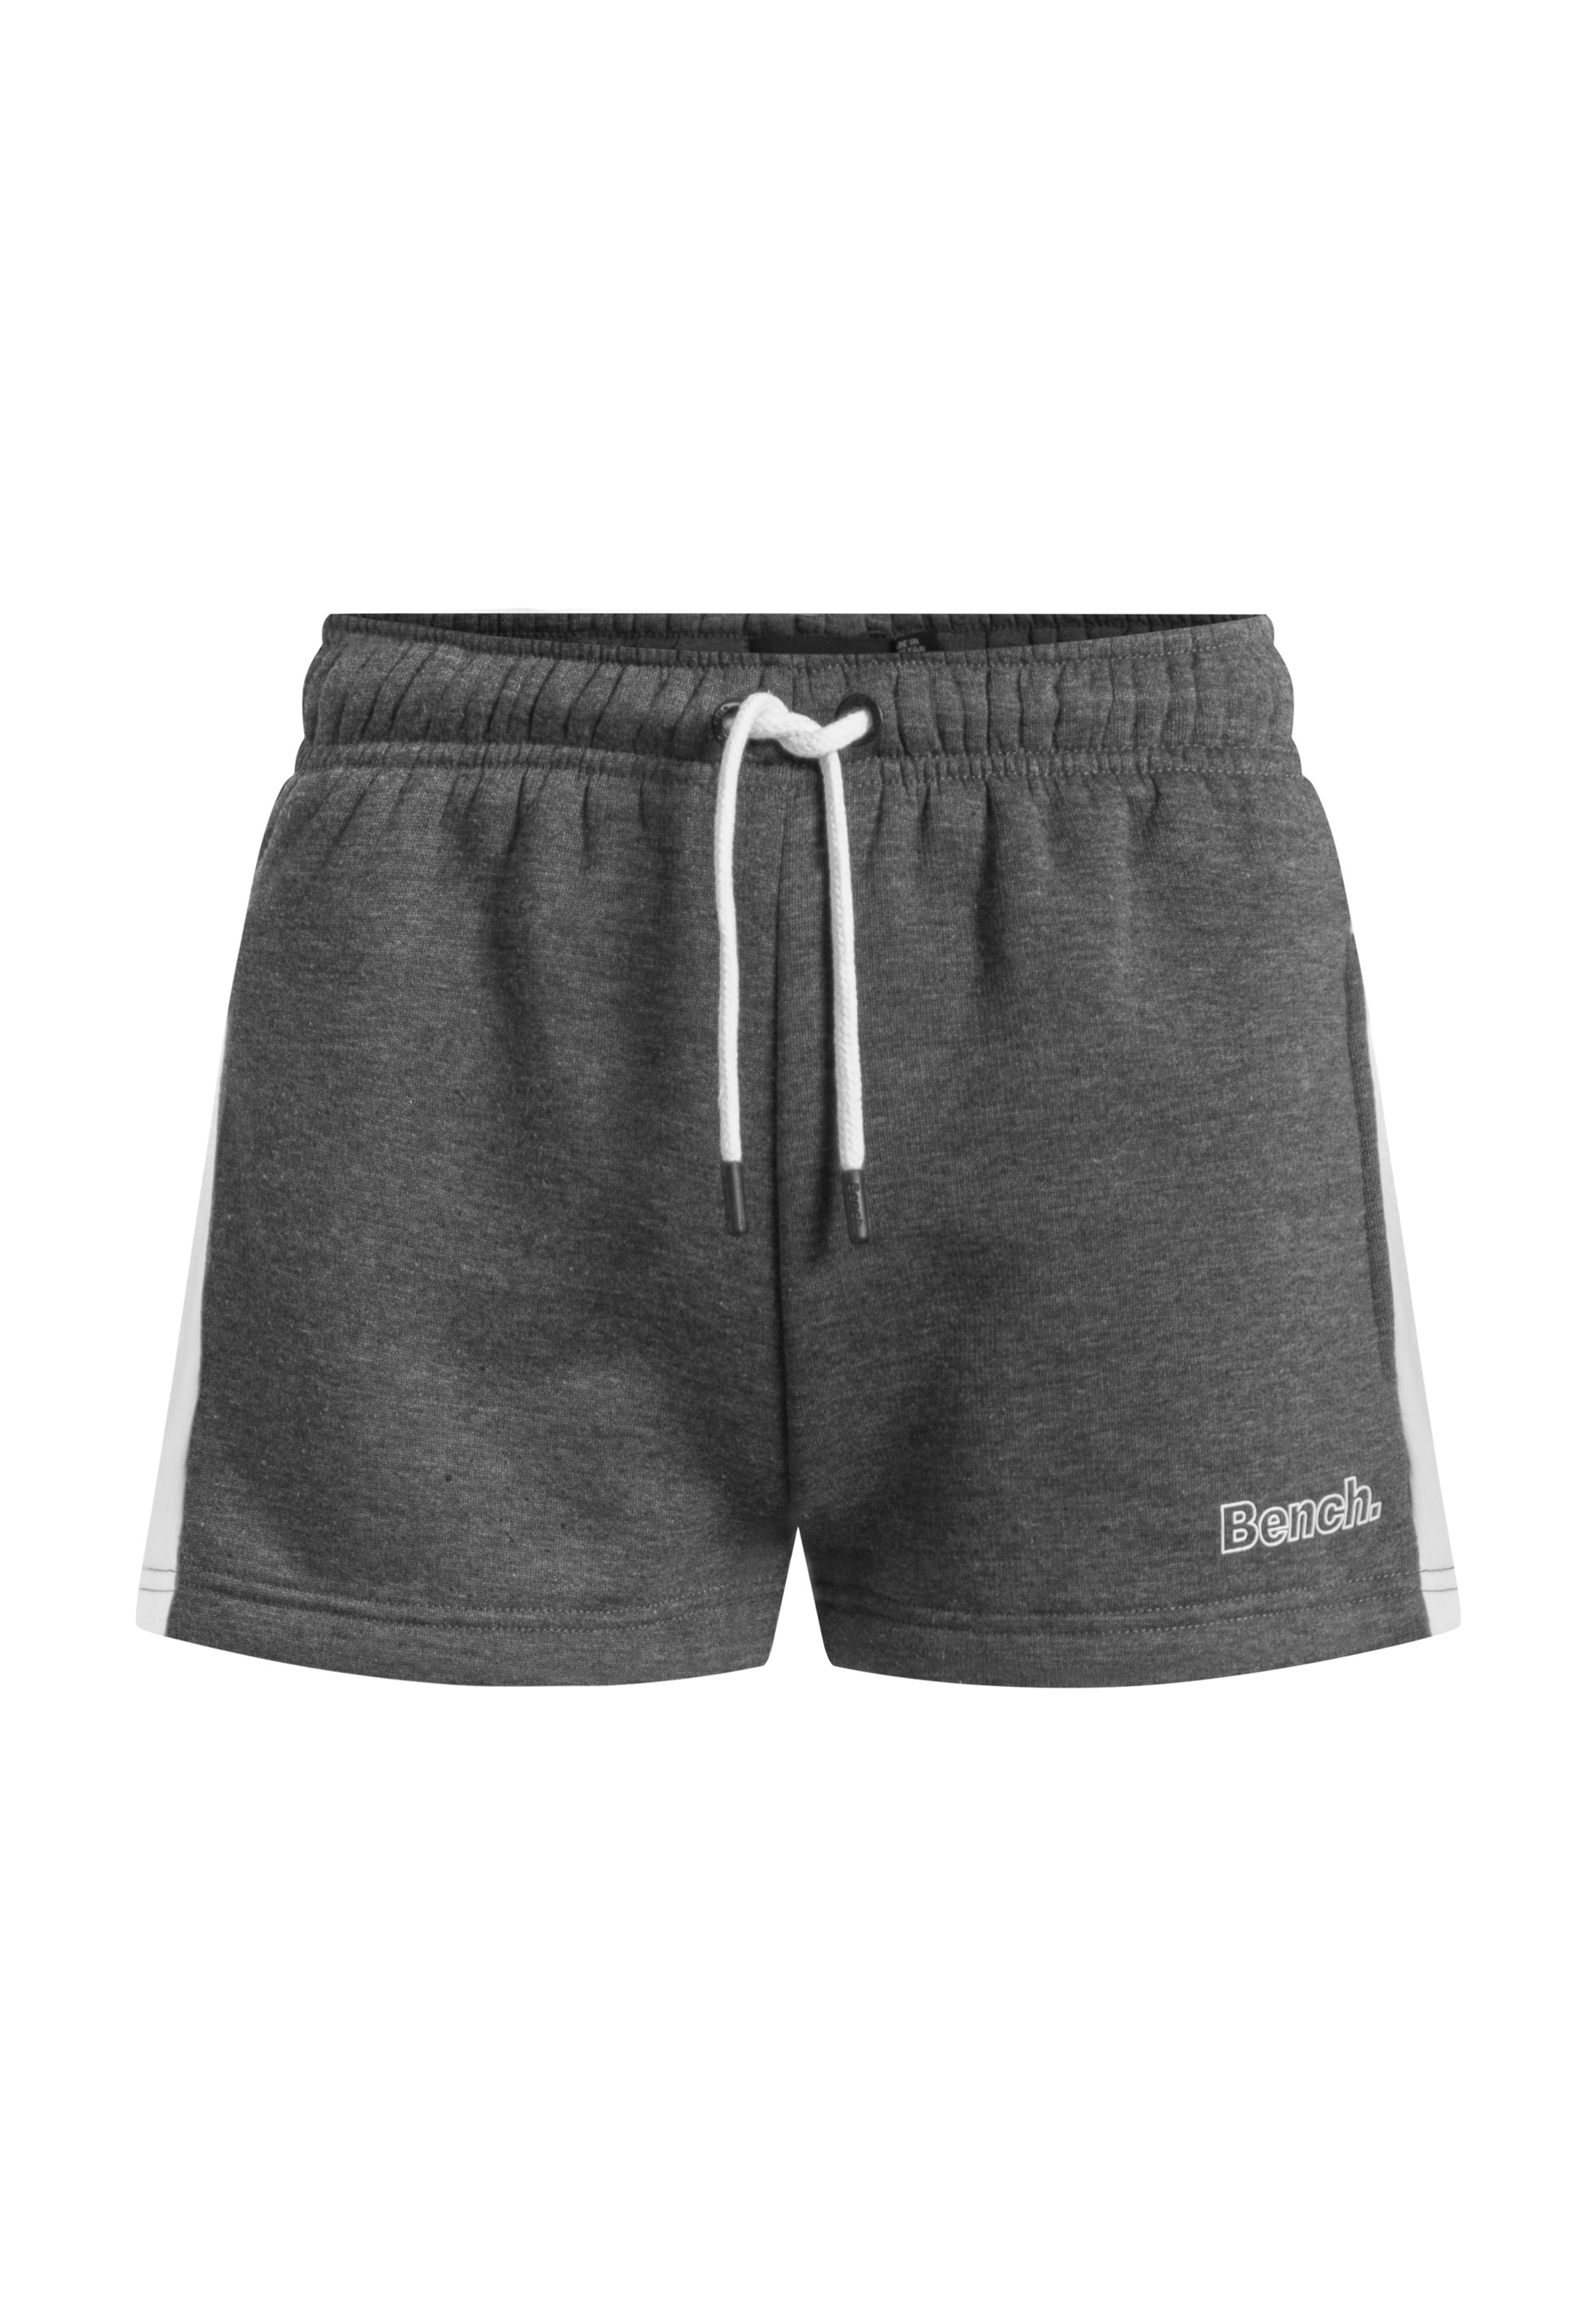 Bench. Shorts Gummidruck kaufen | BAUR »Kelis«, Logo